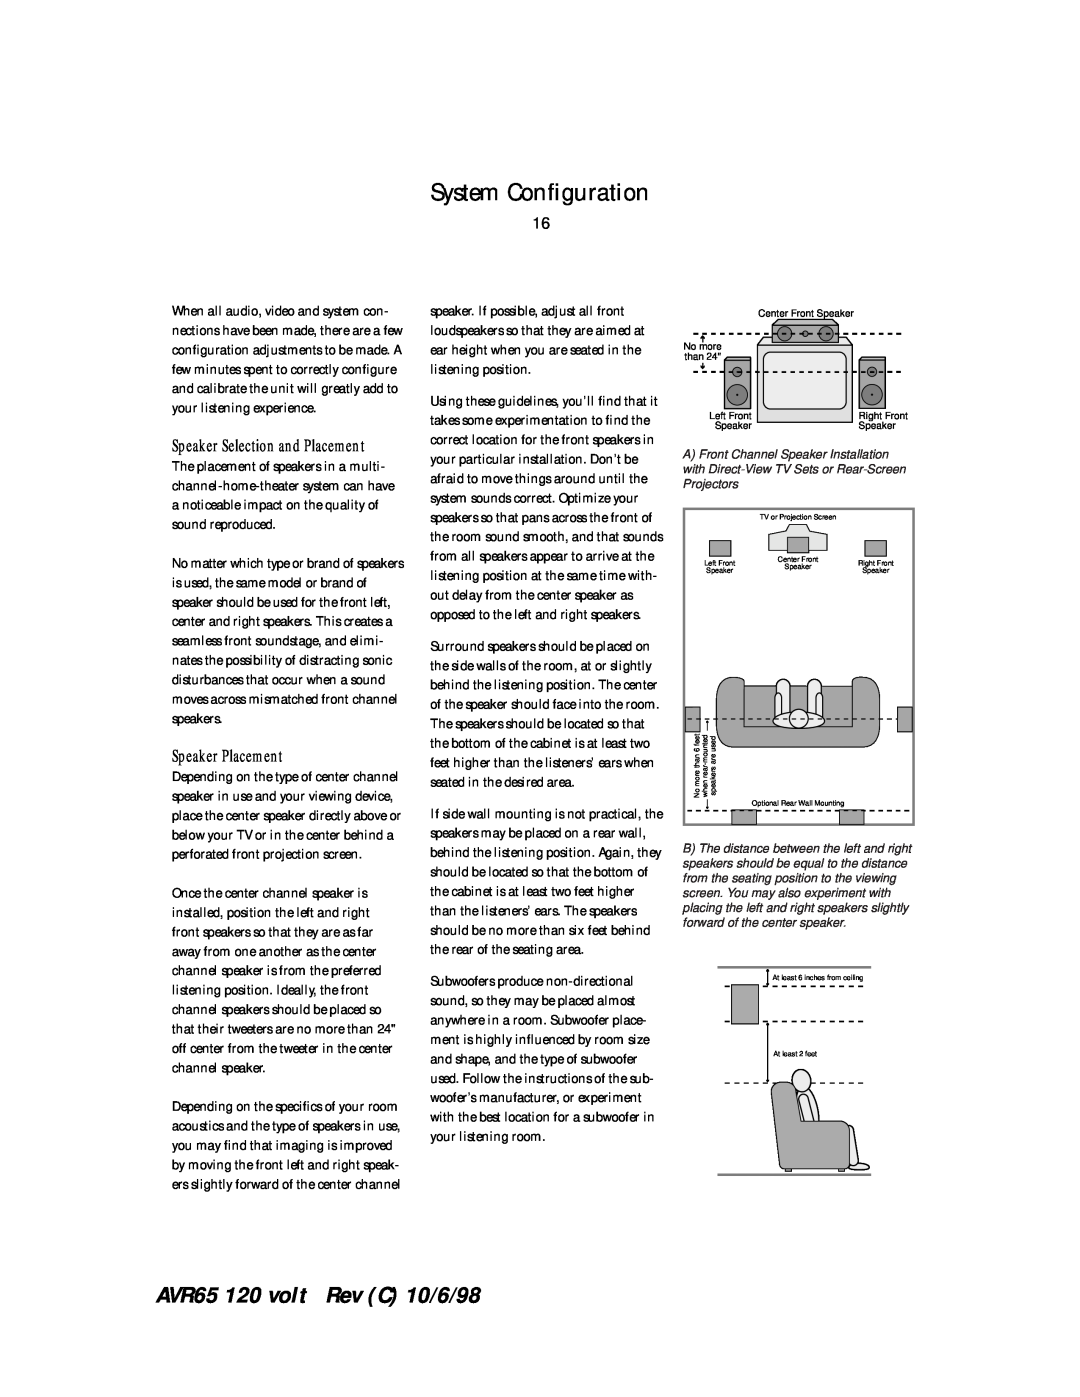 Harman-Kardon manual System Configuration, Speaker Placement, AVR65 120 volt Rev C 10/6/98 